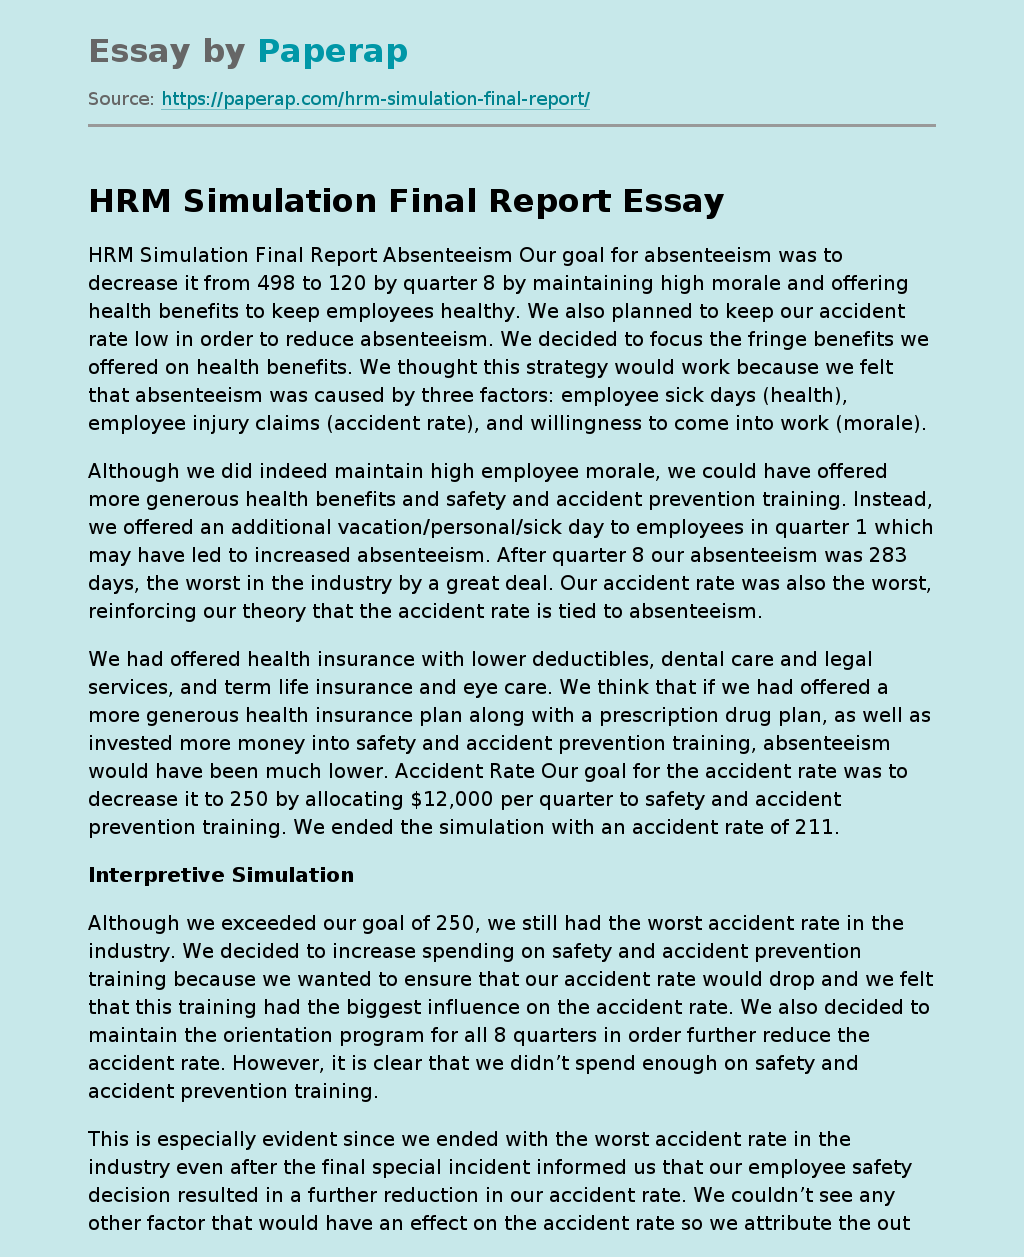 HRM Simulation Final Report